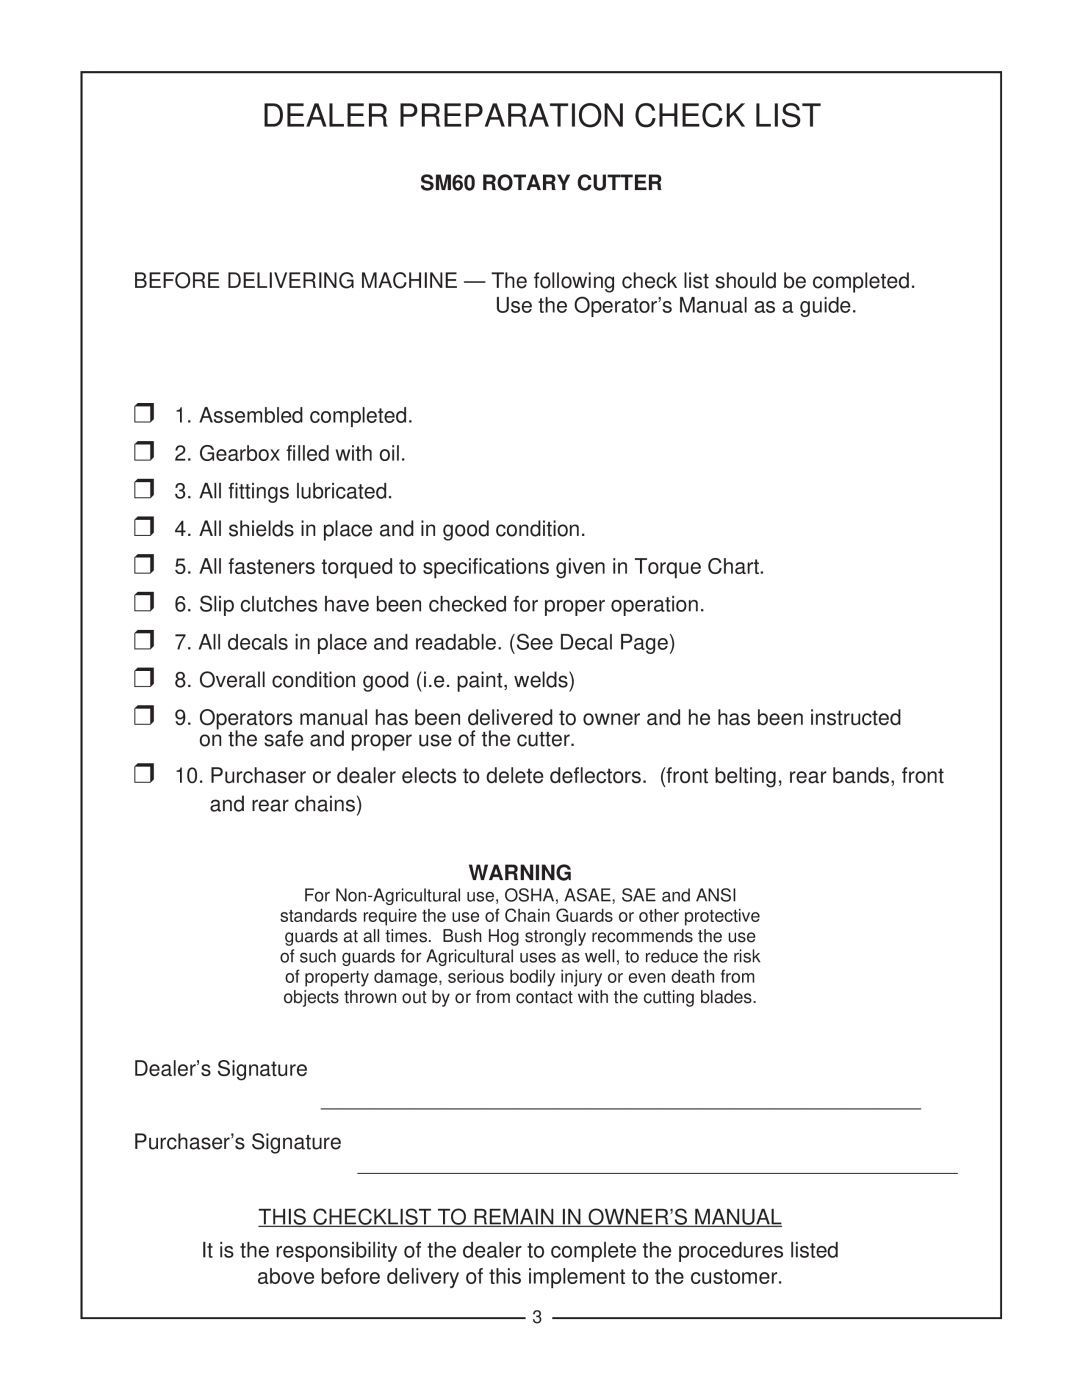 Bush Hog SM 60 manual SM60 ROTARY CUTTER, Dealer Preparation Check List 